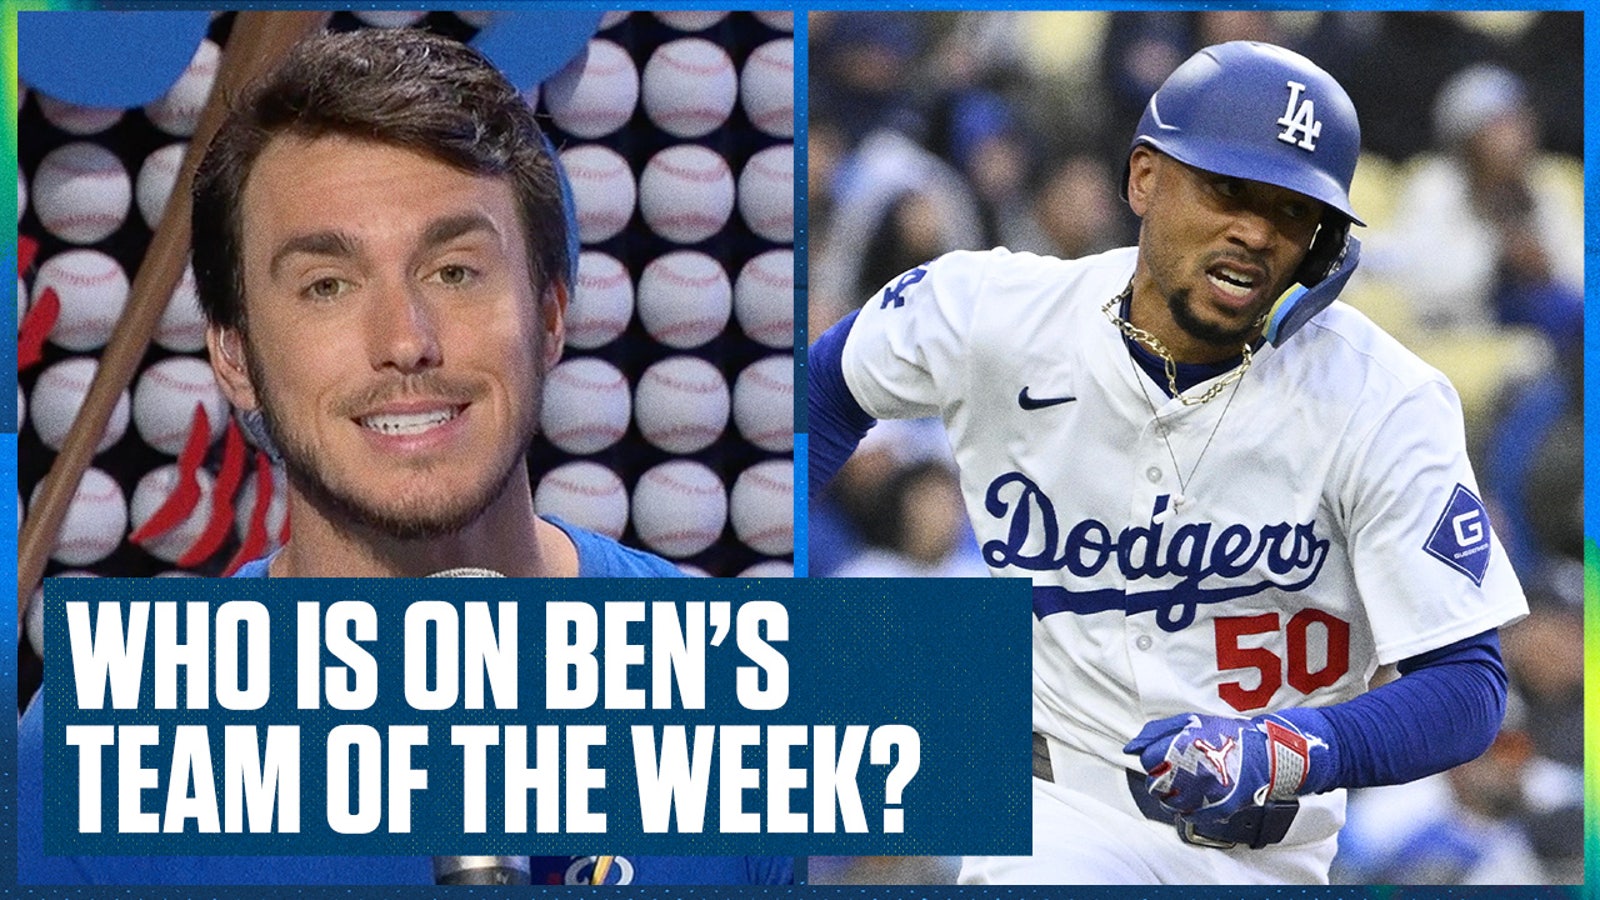 Dodgers' Mookie Betts leads Ben's Team of the Week